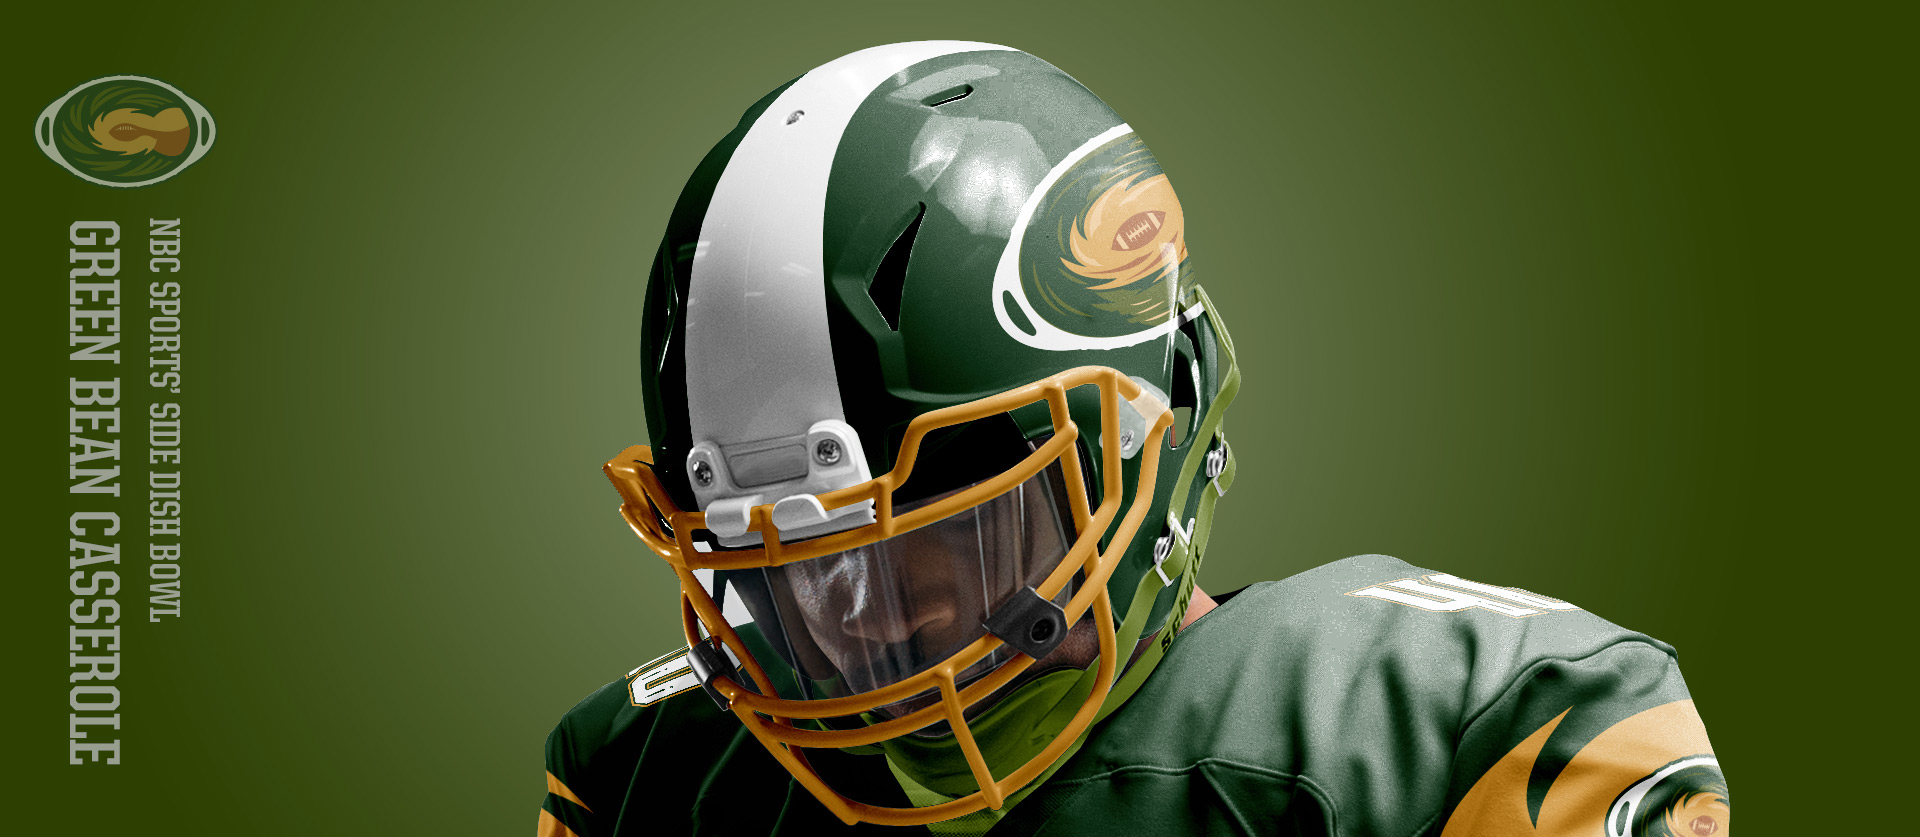 Green Bean Casseroles Helmet Frontside - Football Uniform Design for NBC Sports Thanksgiving Side Dish Bowl